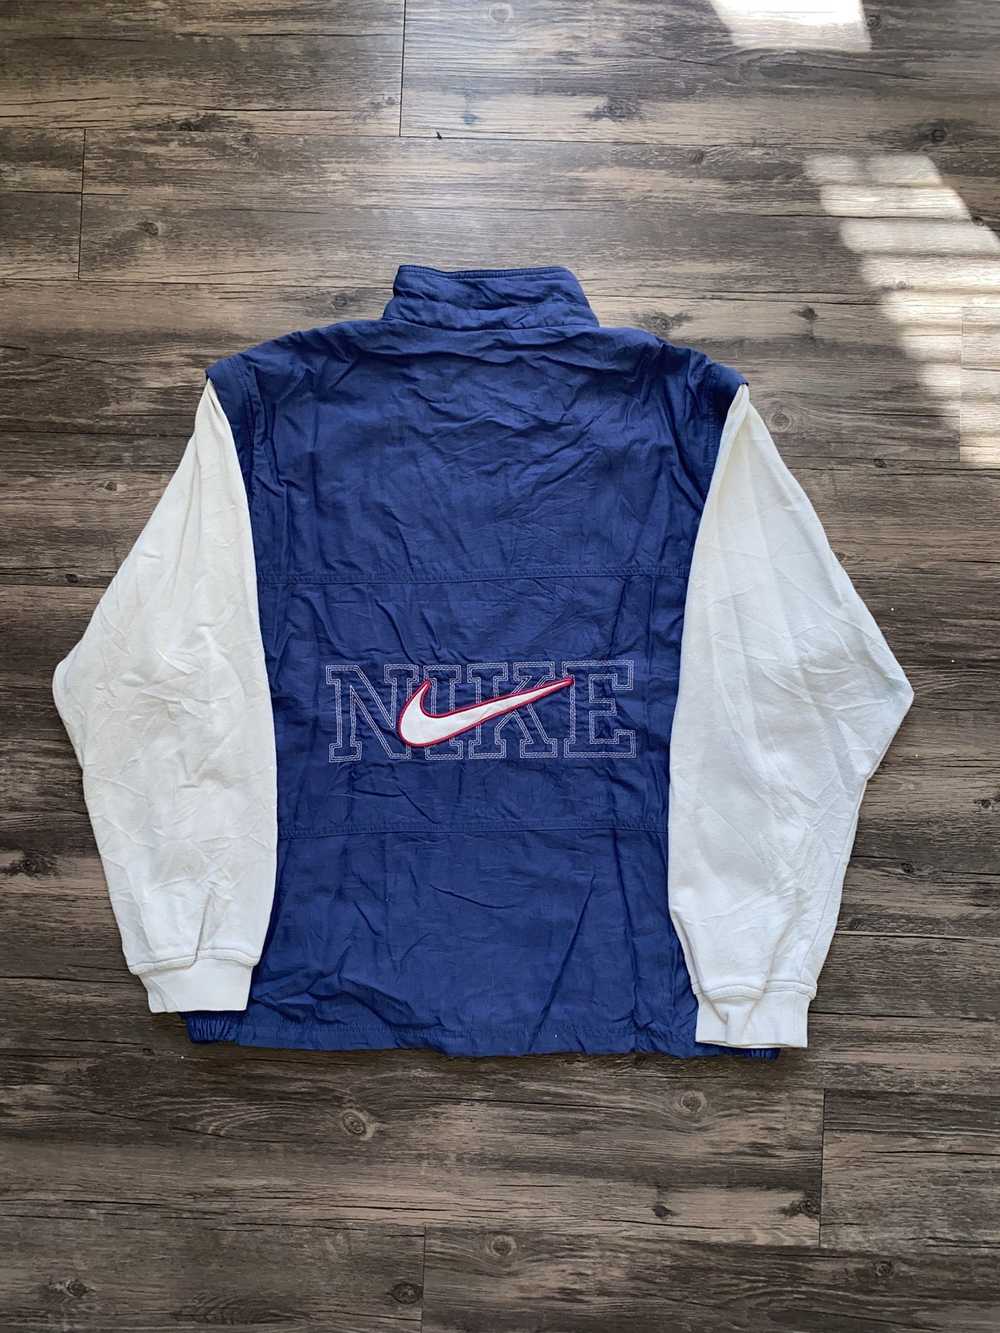 Nike Vintage 90s Nike Jacket/Vest - image 1